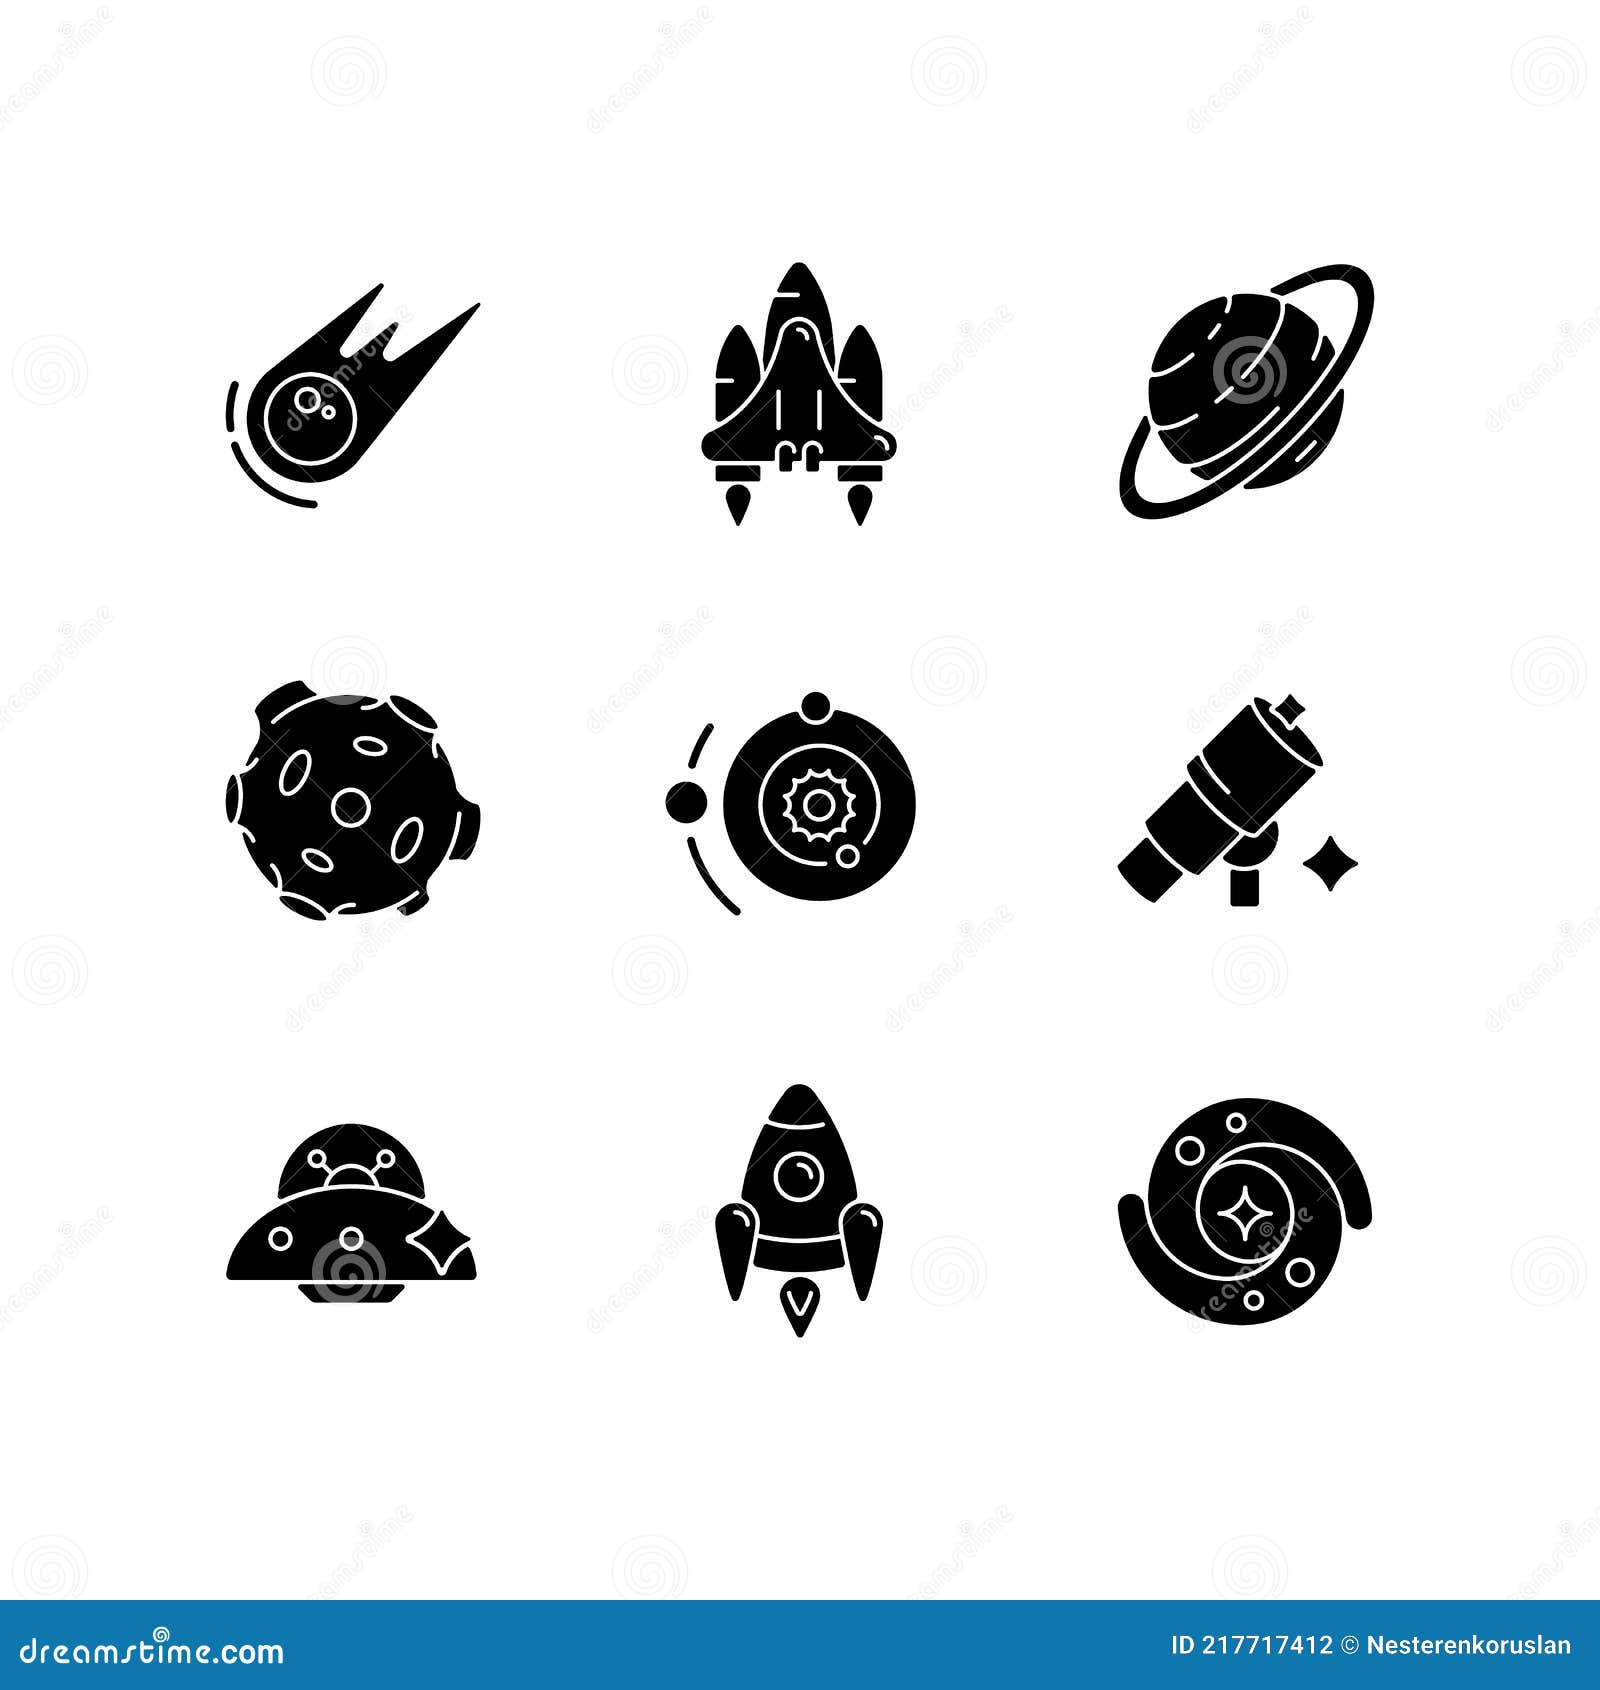 astronautic black glyph icons set on white space